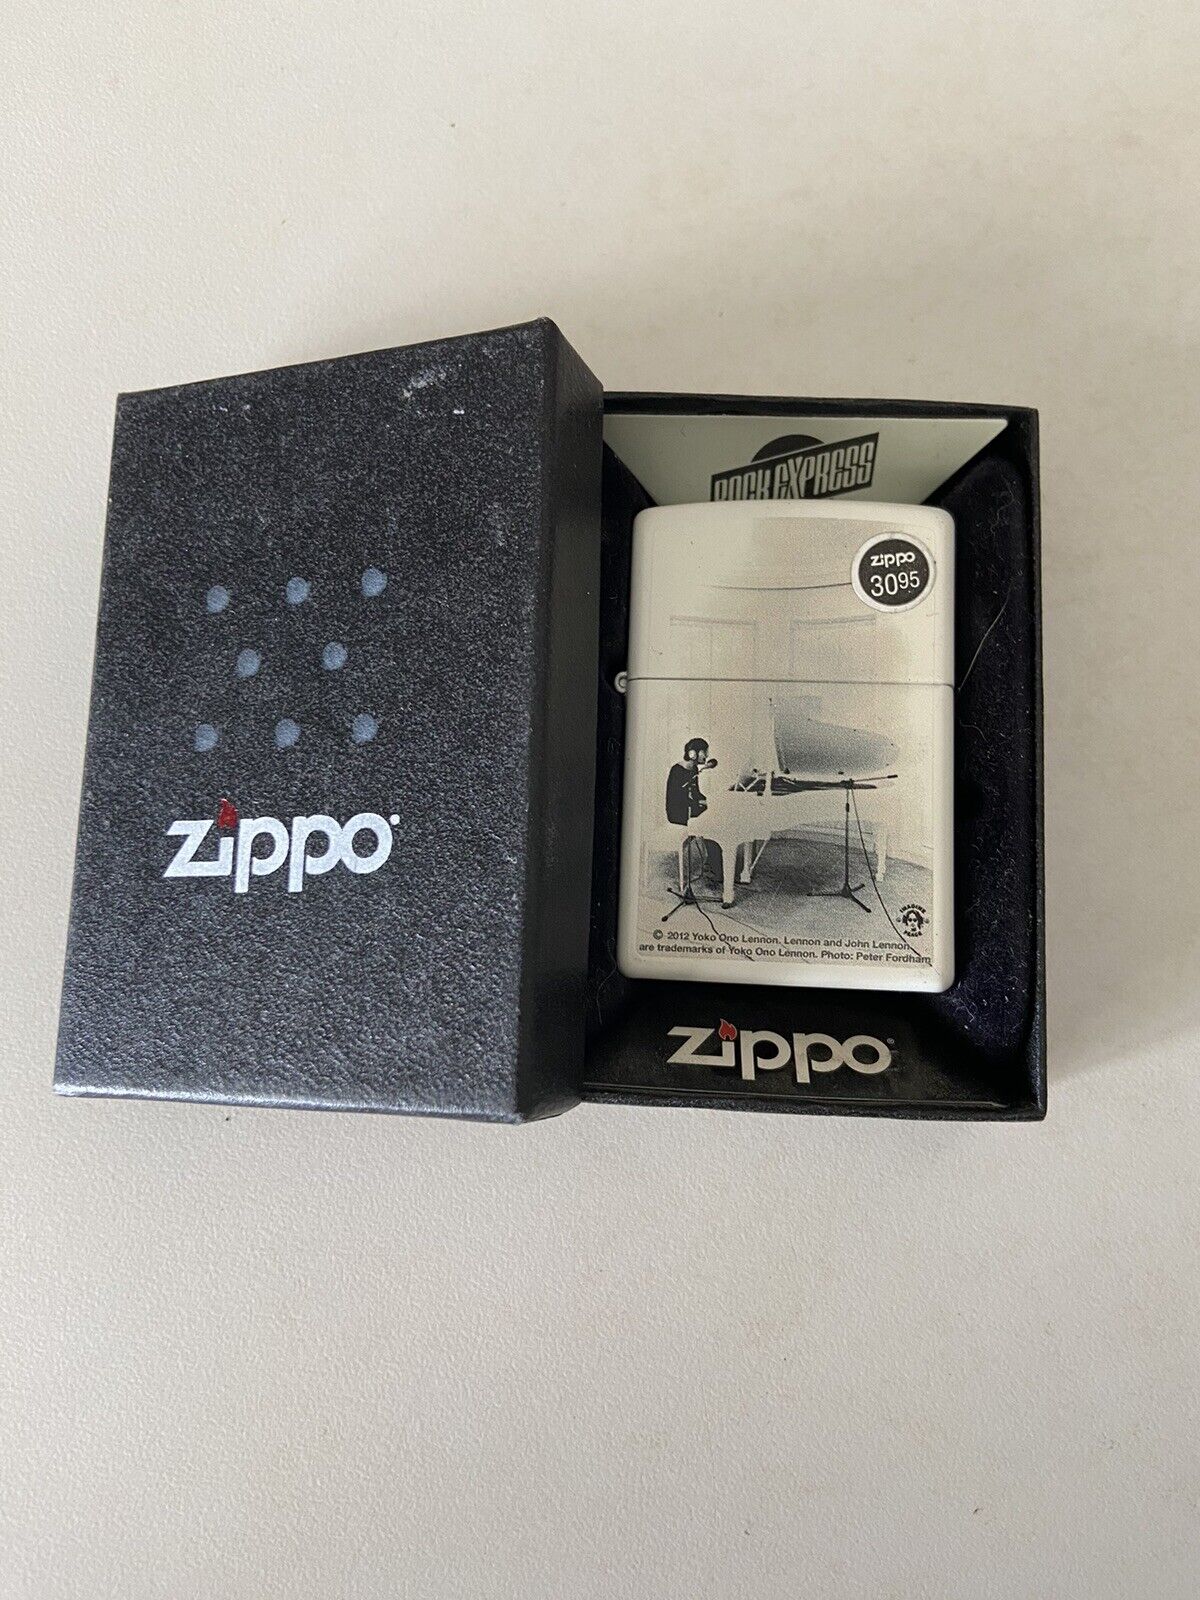 Zippo Lighter - John Lennon - Imagine - The Beatles - Piano - Rare - 28731